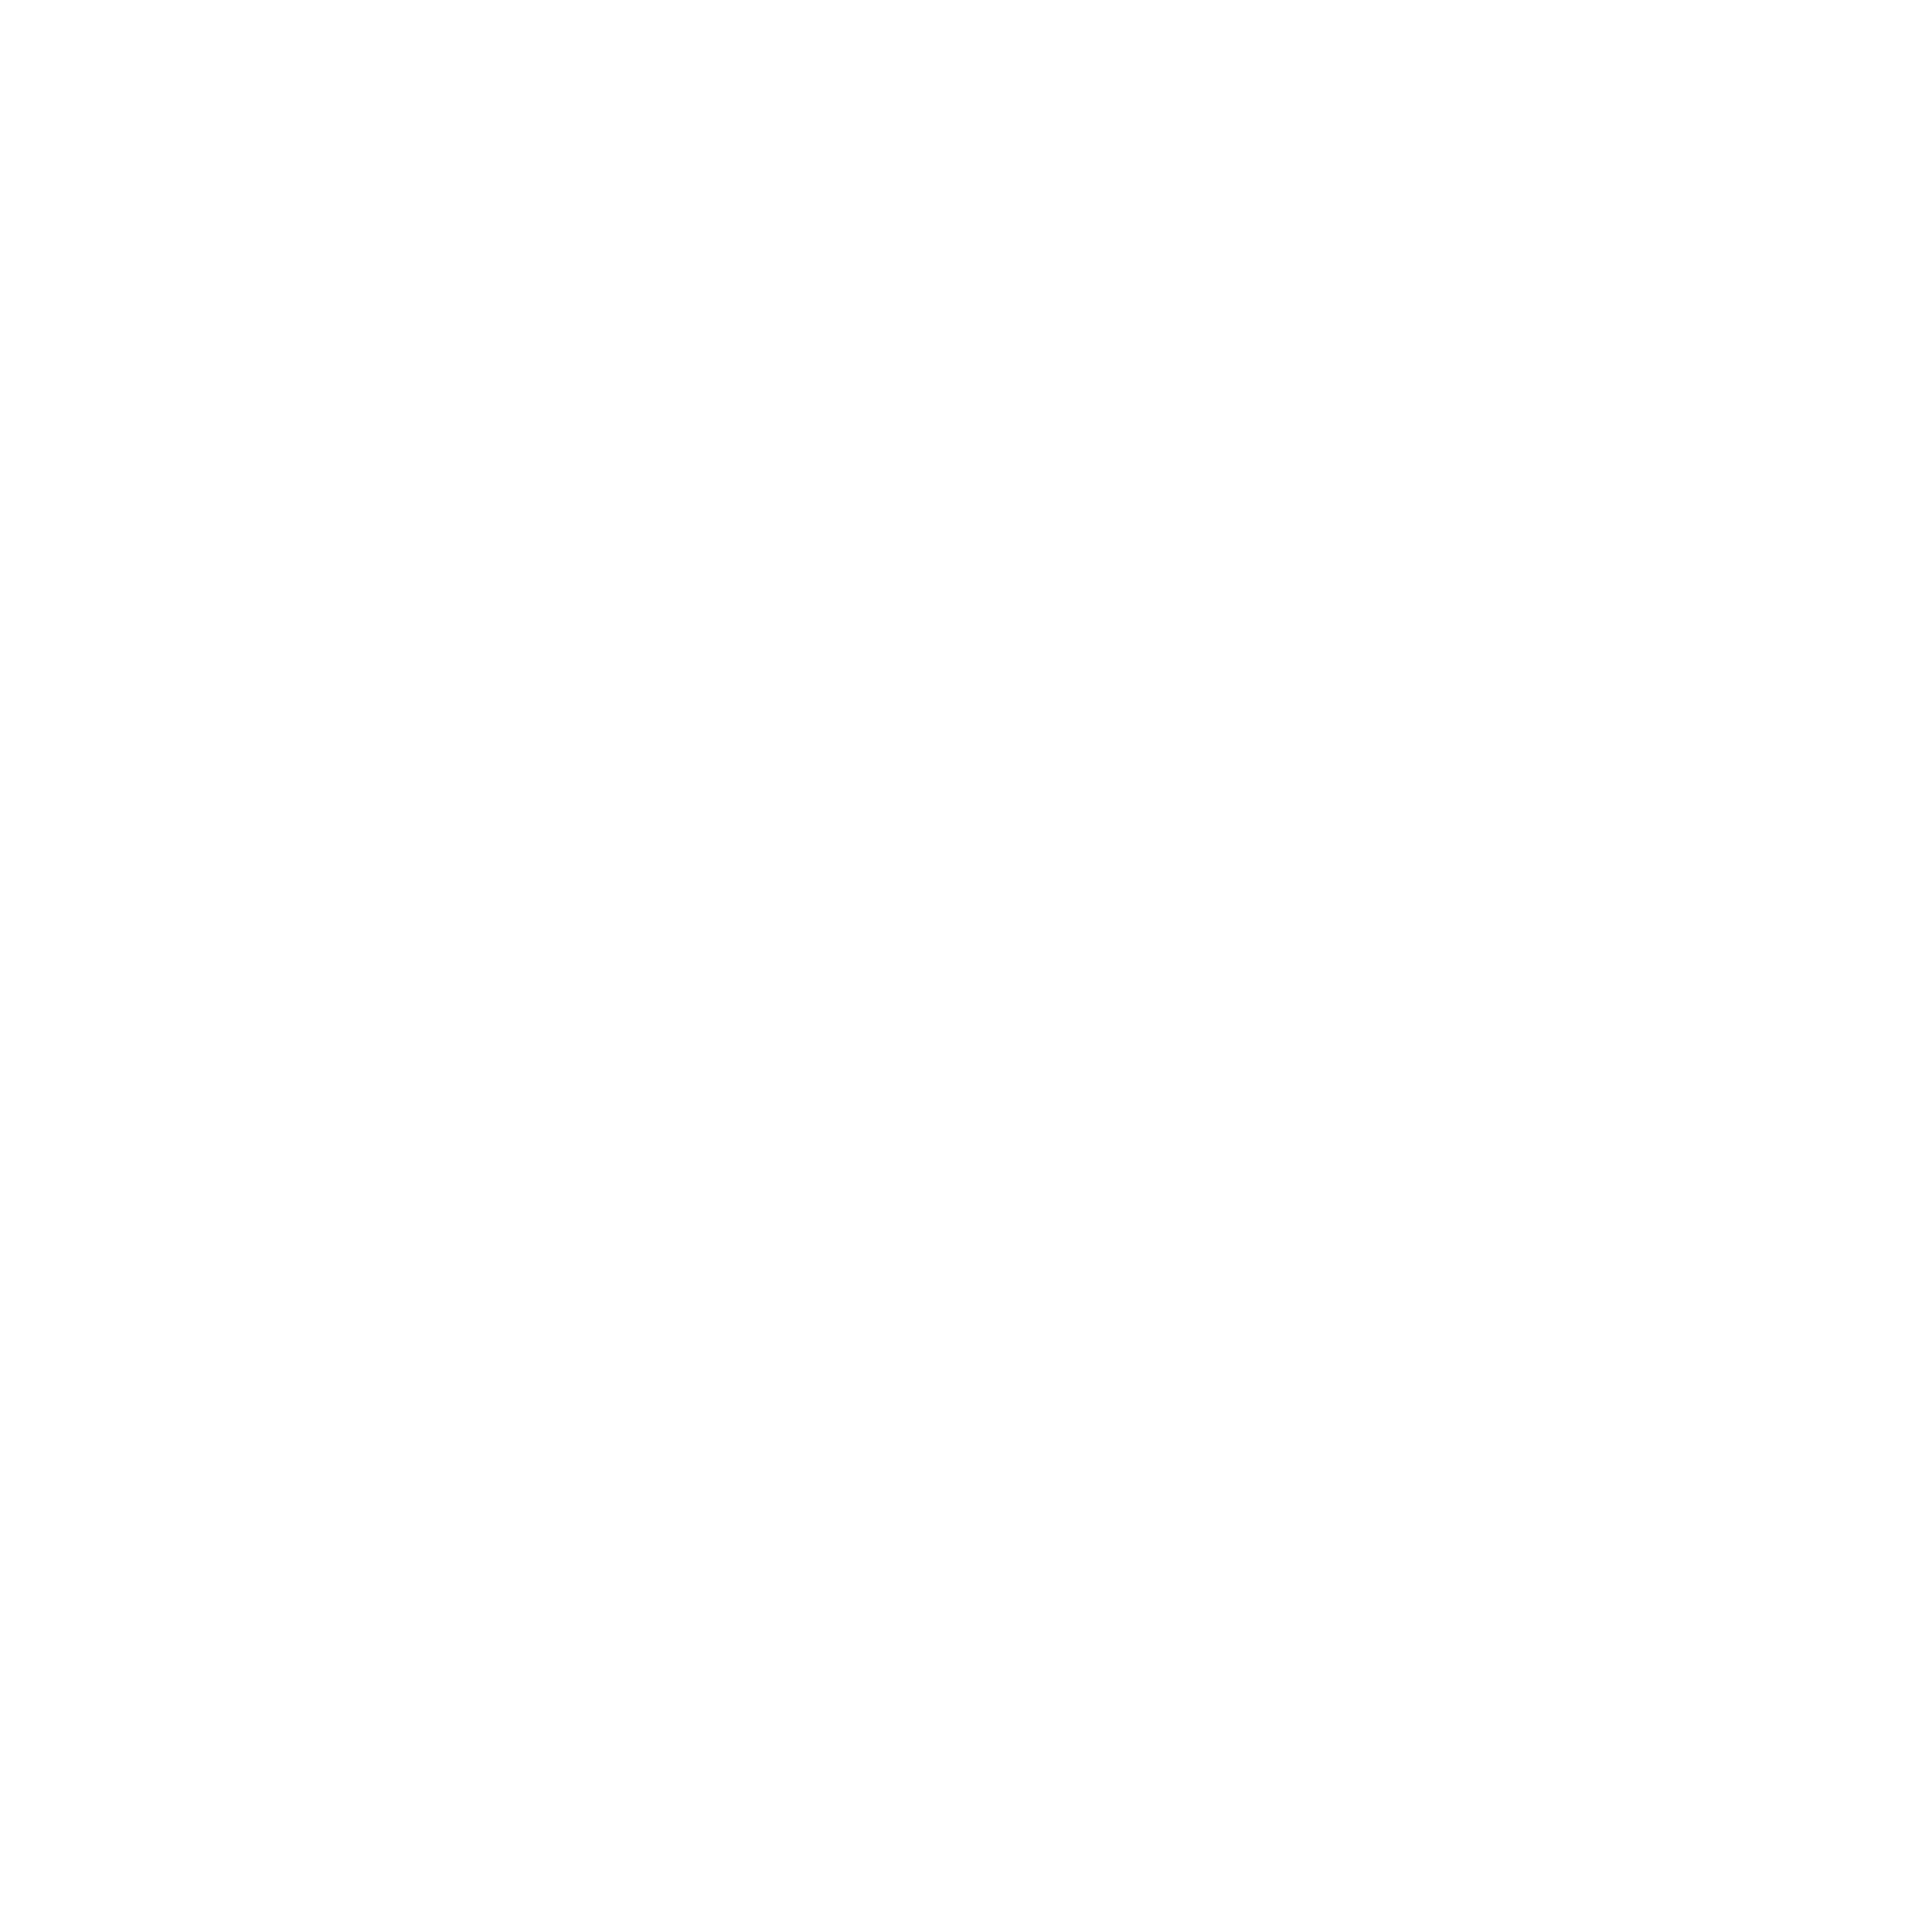 Hart-logos-black-trans5.png